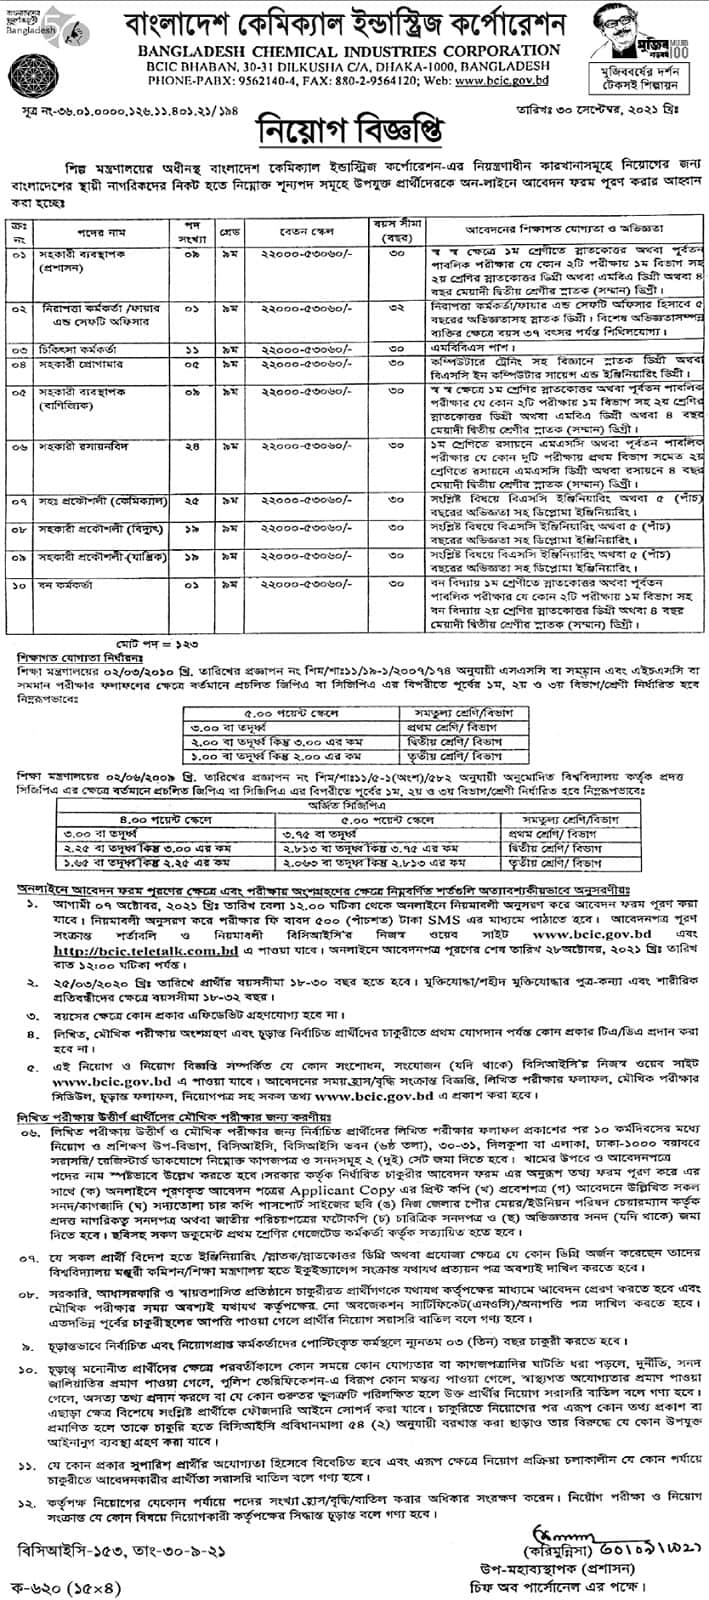 Bangladesh Chemical Industries Corporation Job Circular 2021  